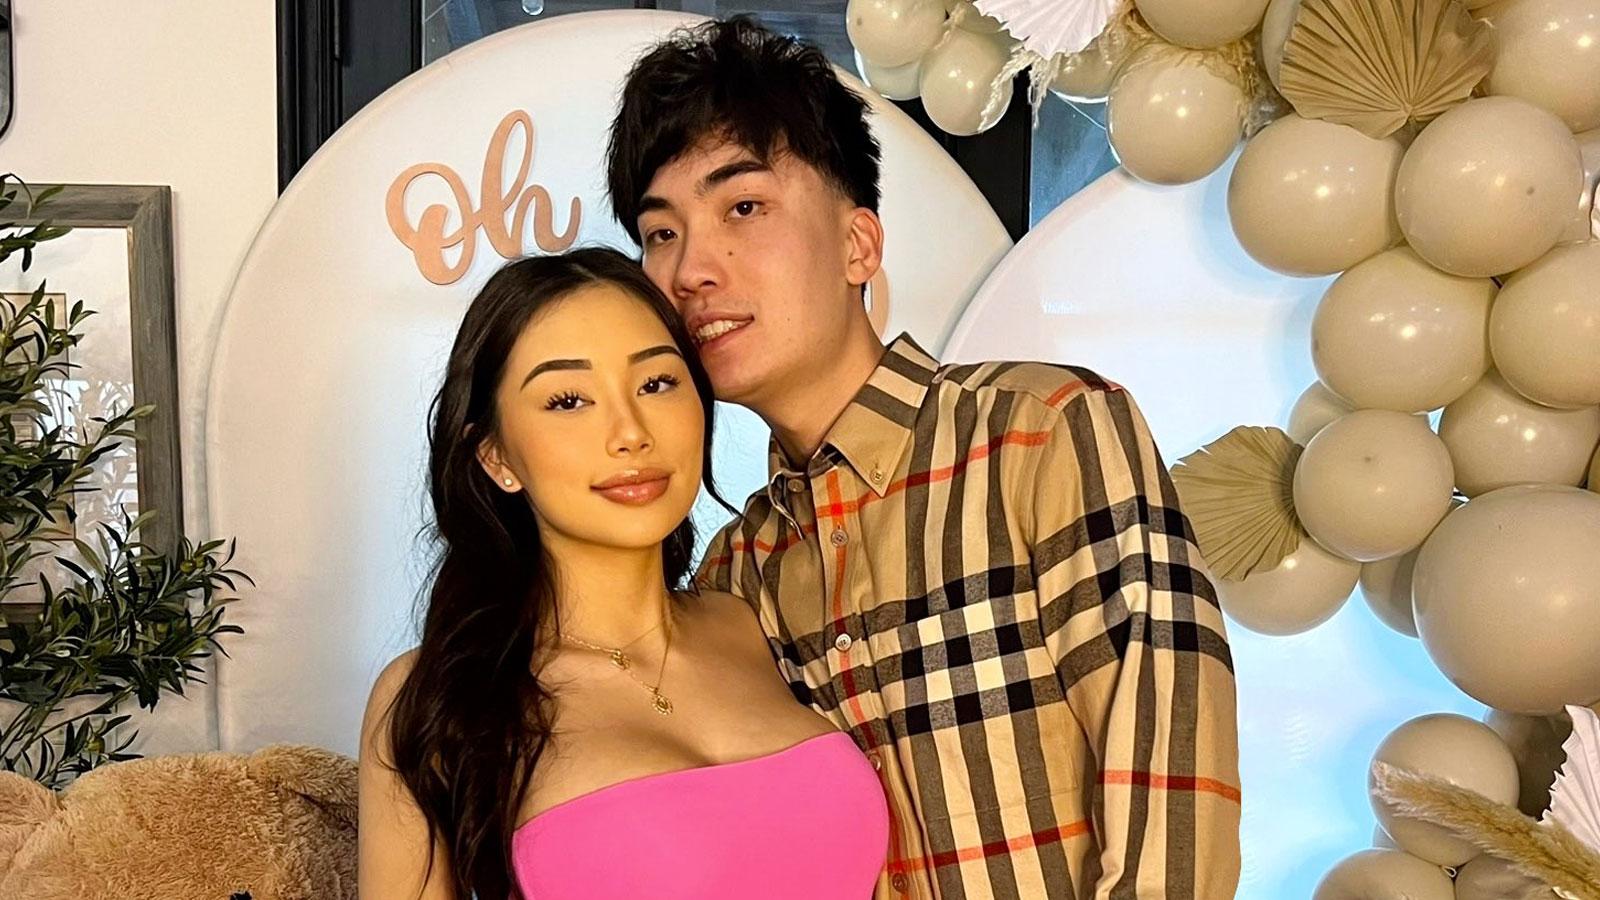 YouTuber Ricegum wearing checkered shirt next to girlfriend wearing pink dress